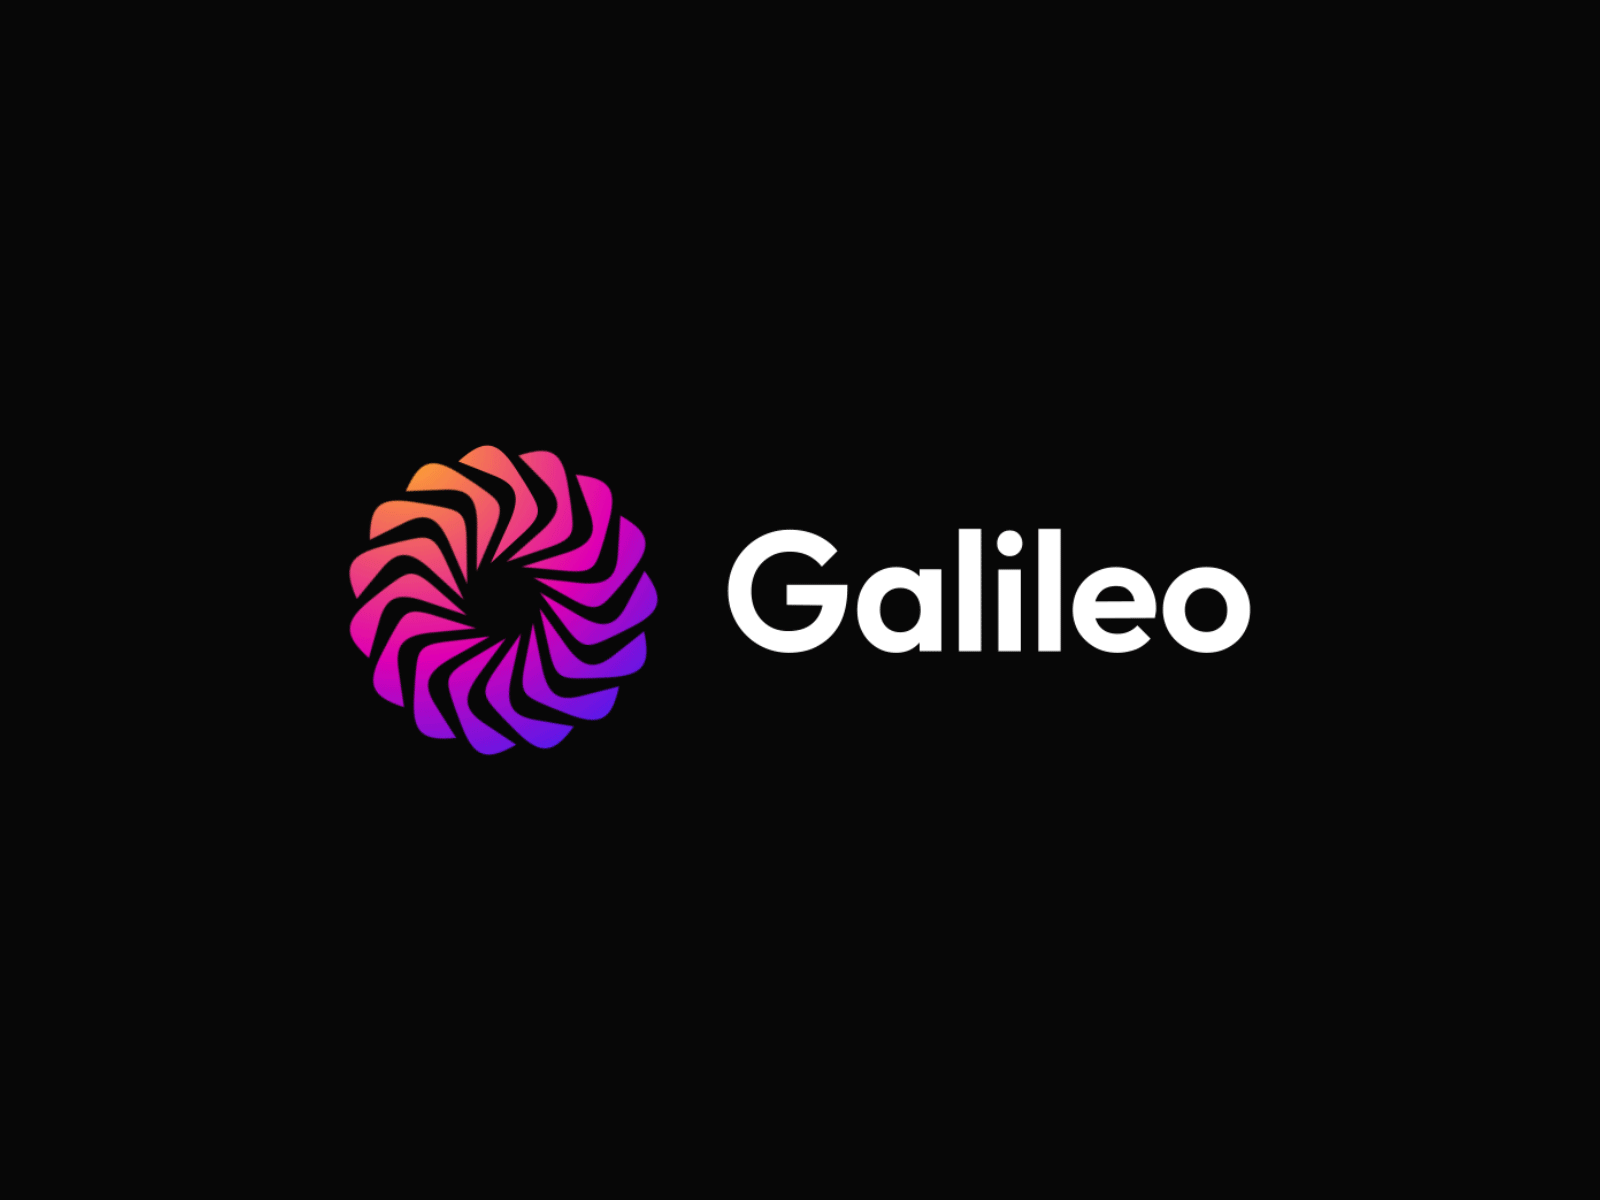 Galileo Animation